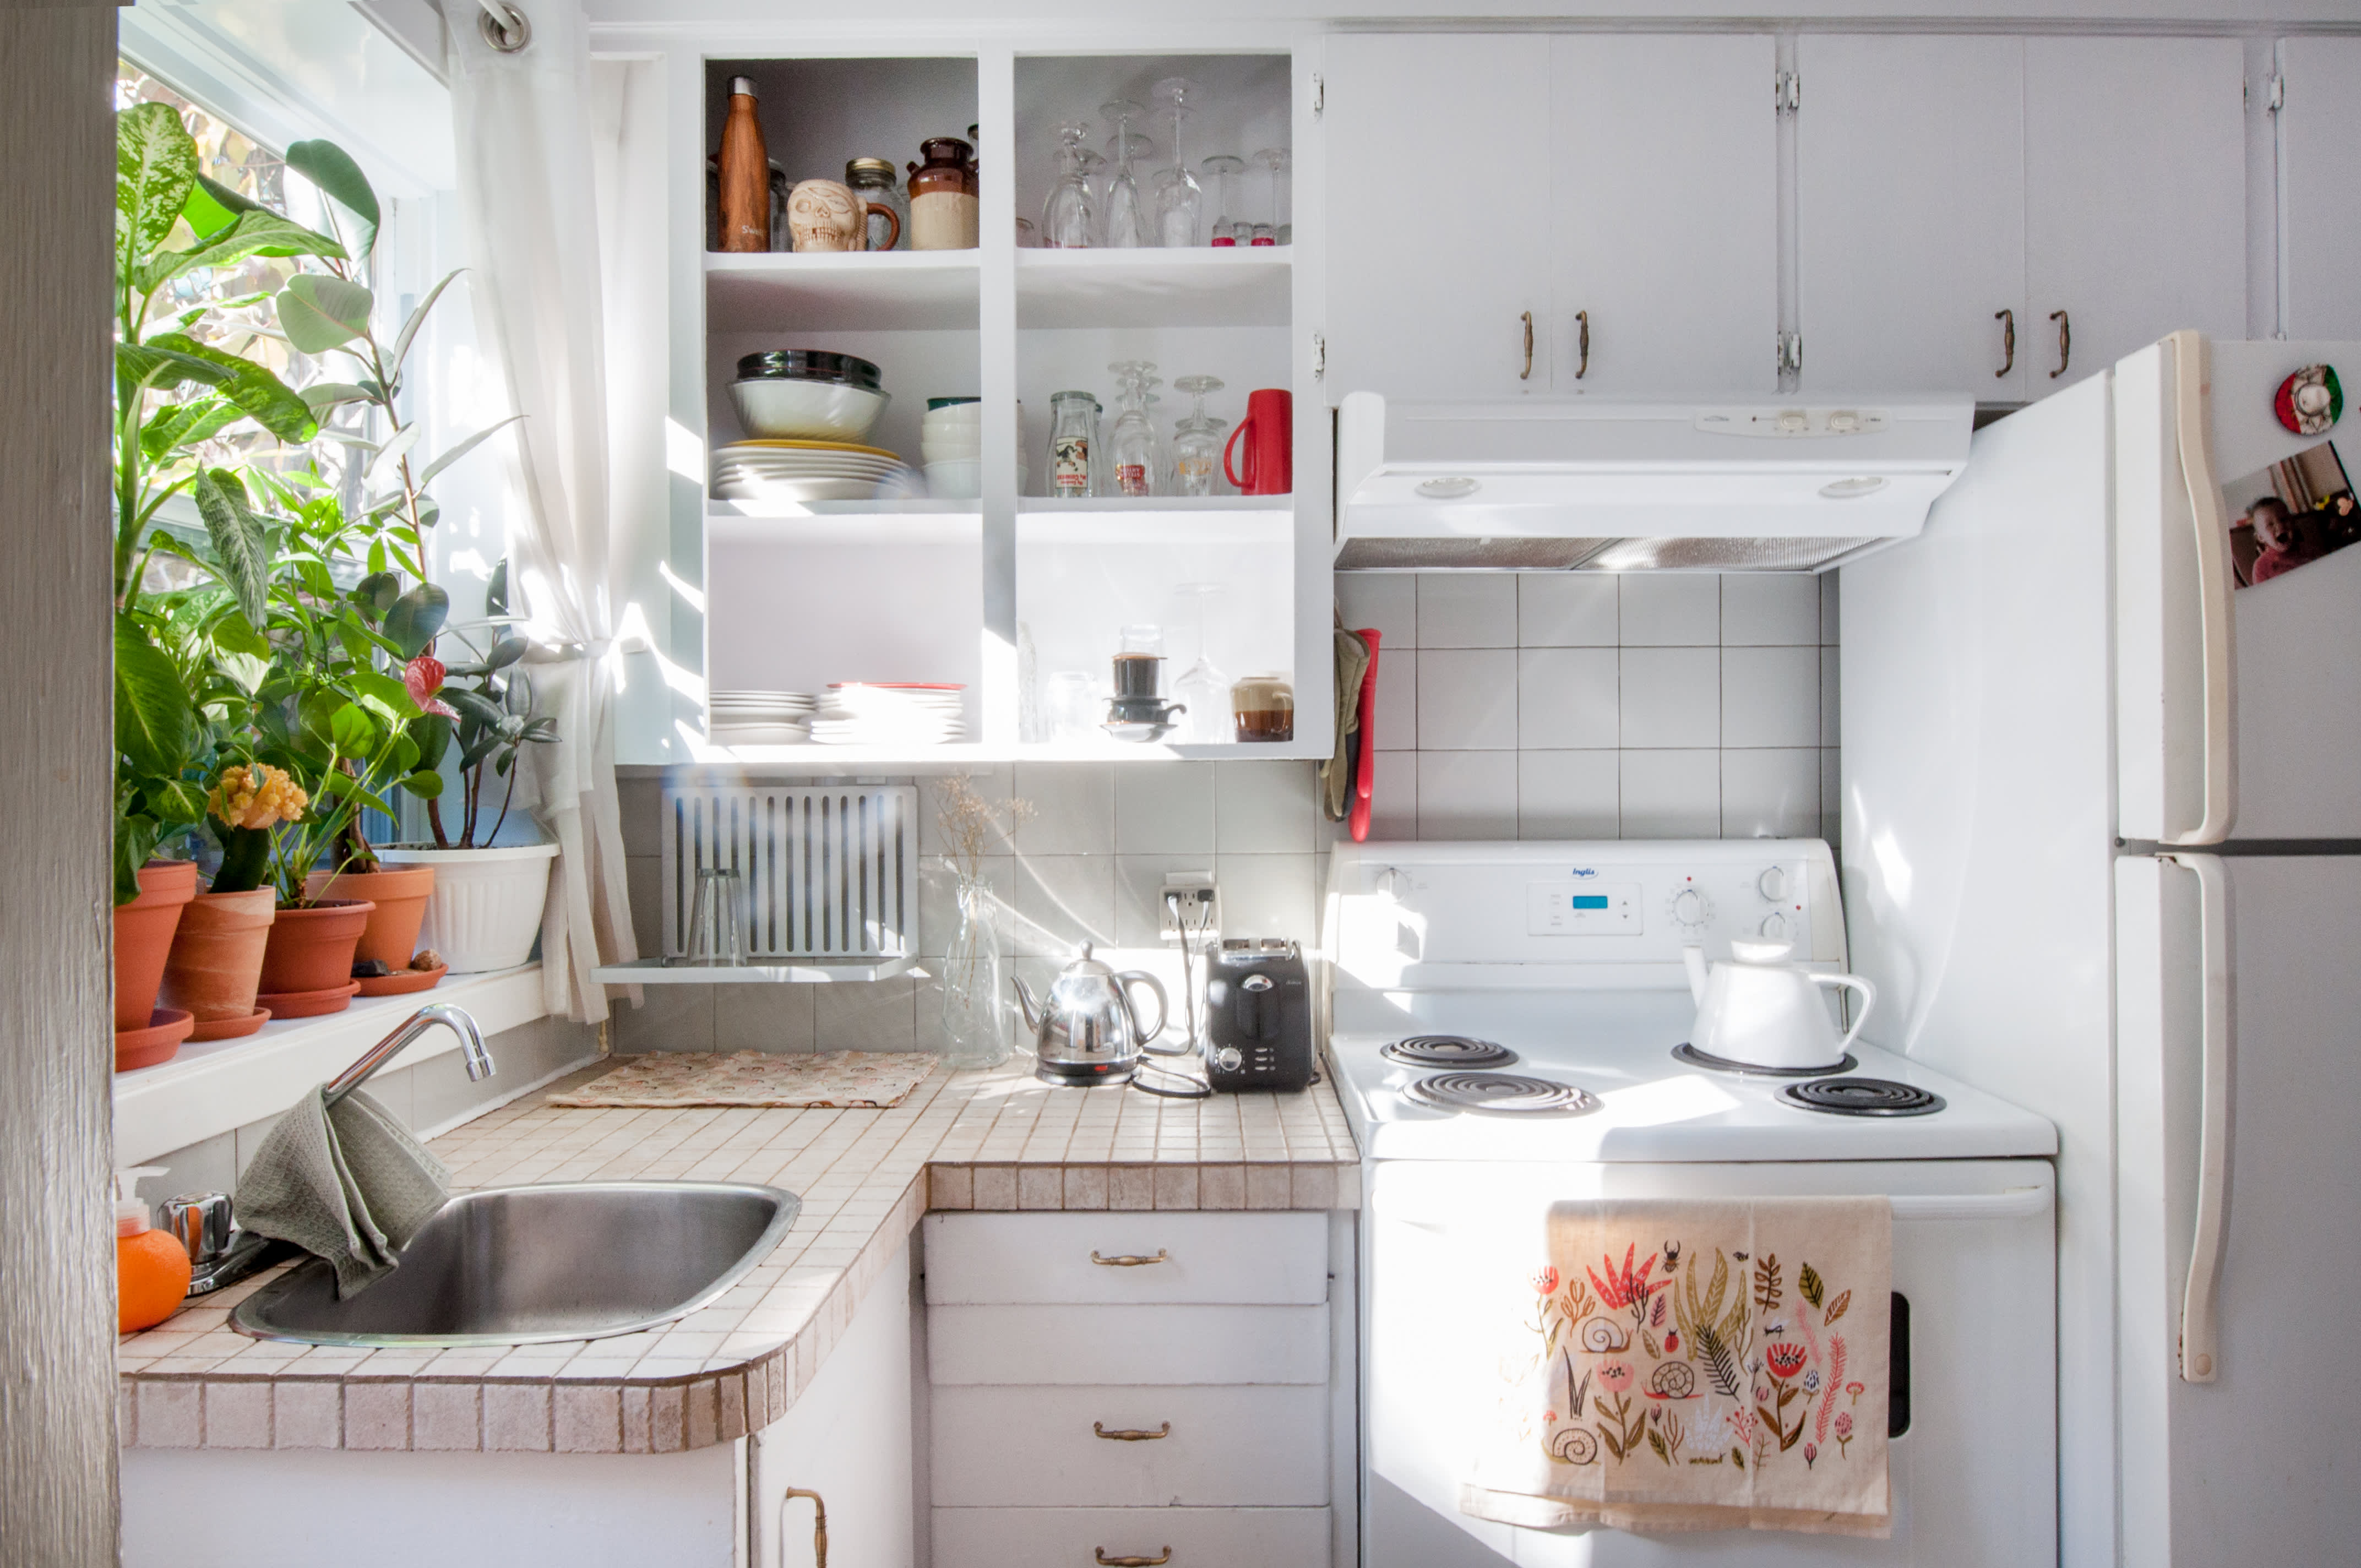 Create More Kitchen Storage: Install Open Shelving Above The Sink - C'est  Bien by Heather Bien